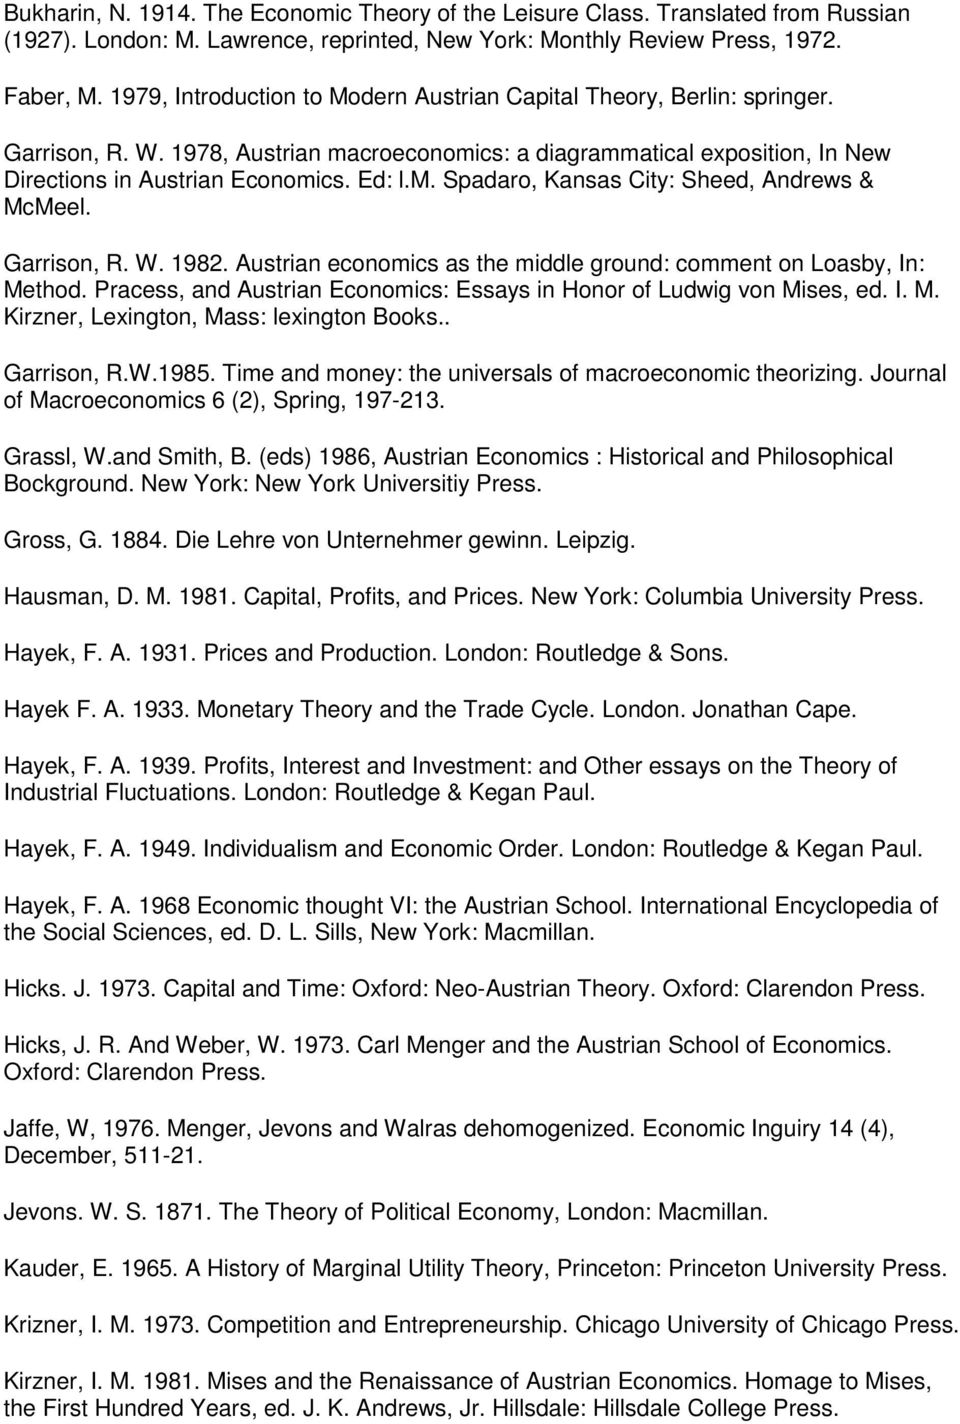 Garrison, R. W. 1982. Austrian economics as the middle ground: comment on Loasby, In: Method. Pracess, and Austrian Economics: Essays in Honor of Ludwig von Mises, ed. I. M. Kirzner, Lexington, Mass: lexington Books.